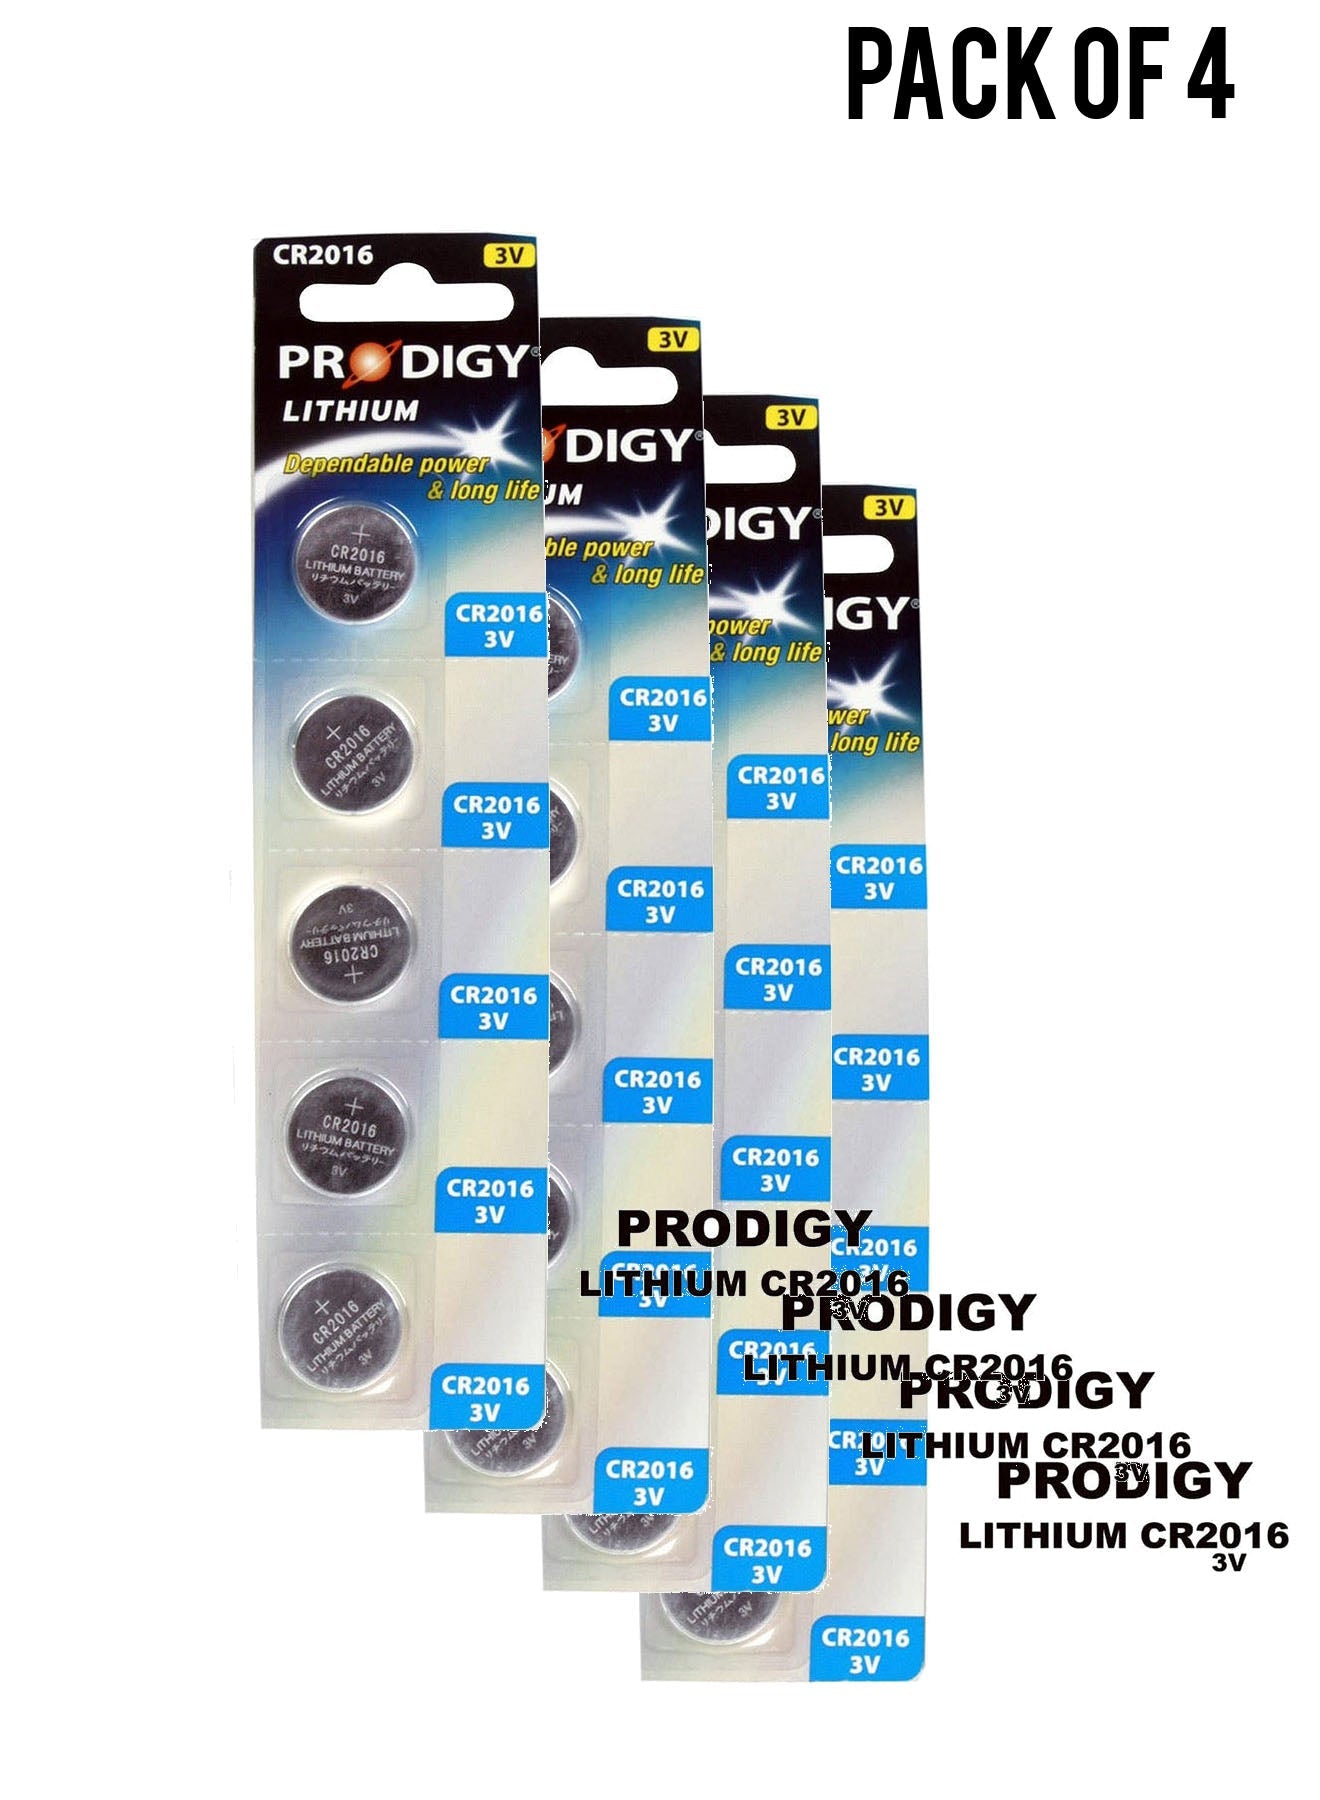 Prodigy Lithium CR2016 3V 5units Value Pack of 4 